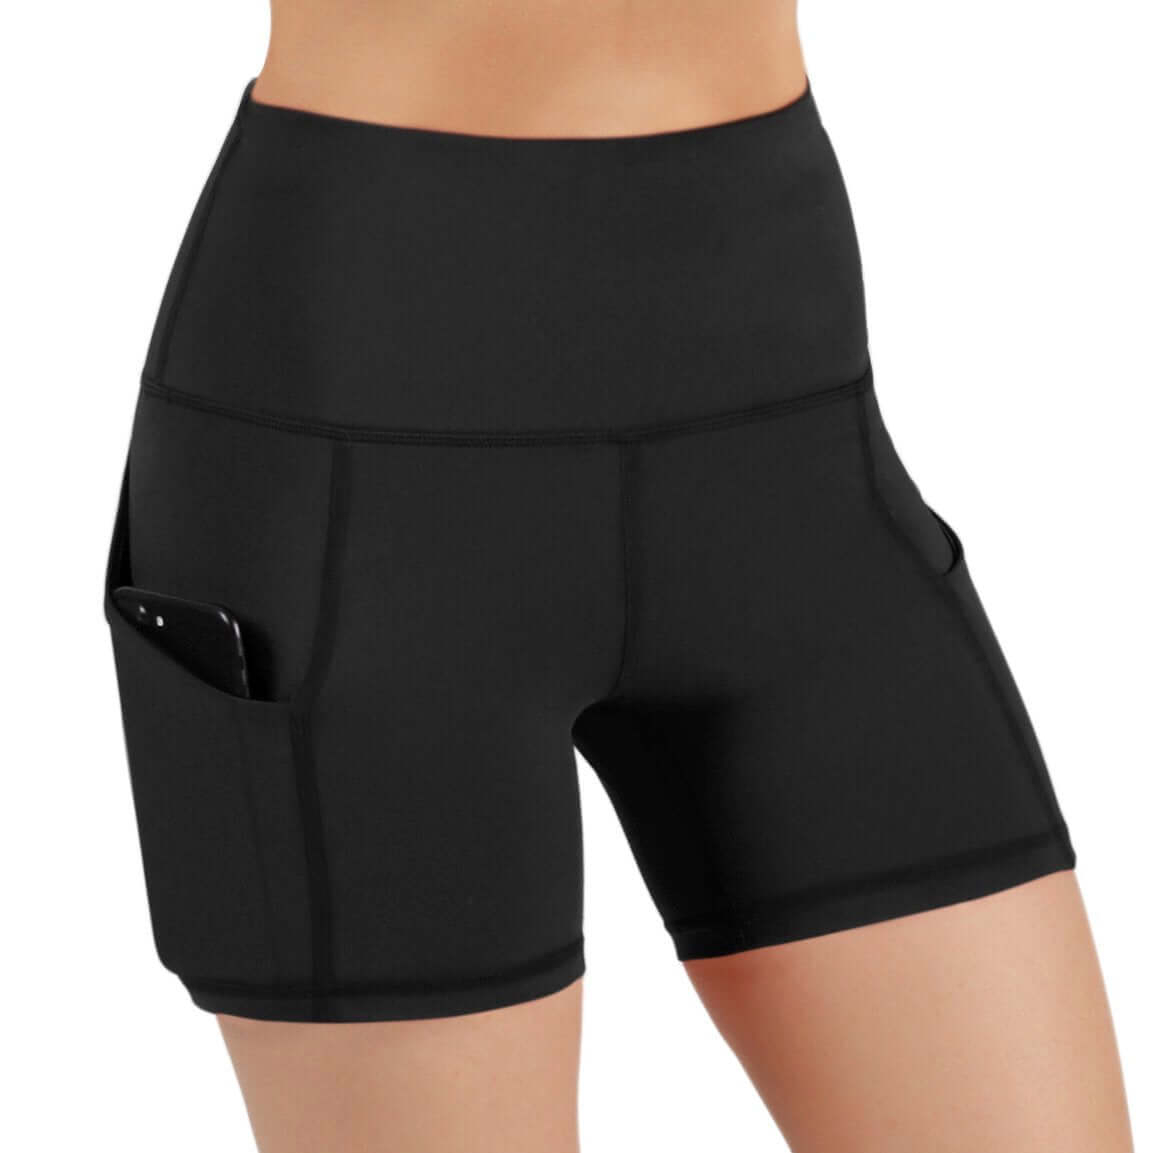 Jolie High-Waisted Athletic Shorts With Hip Pockets - Black, Medium